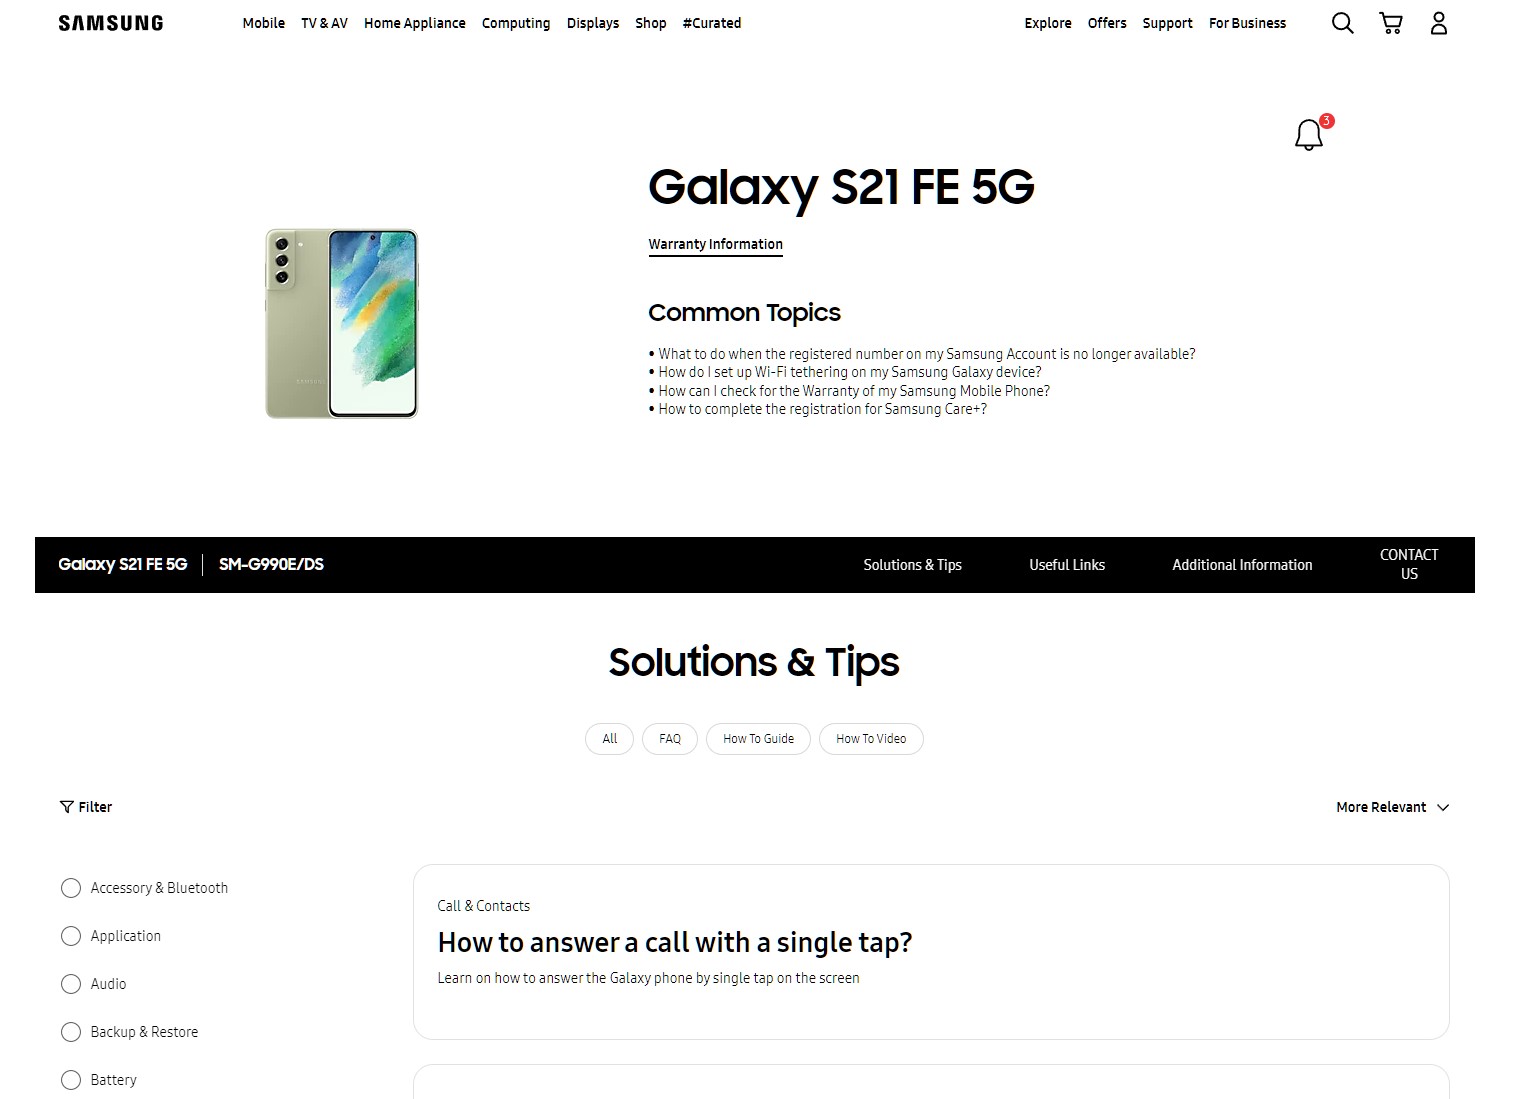 Samsung Galaxy S21 FE 5G Support